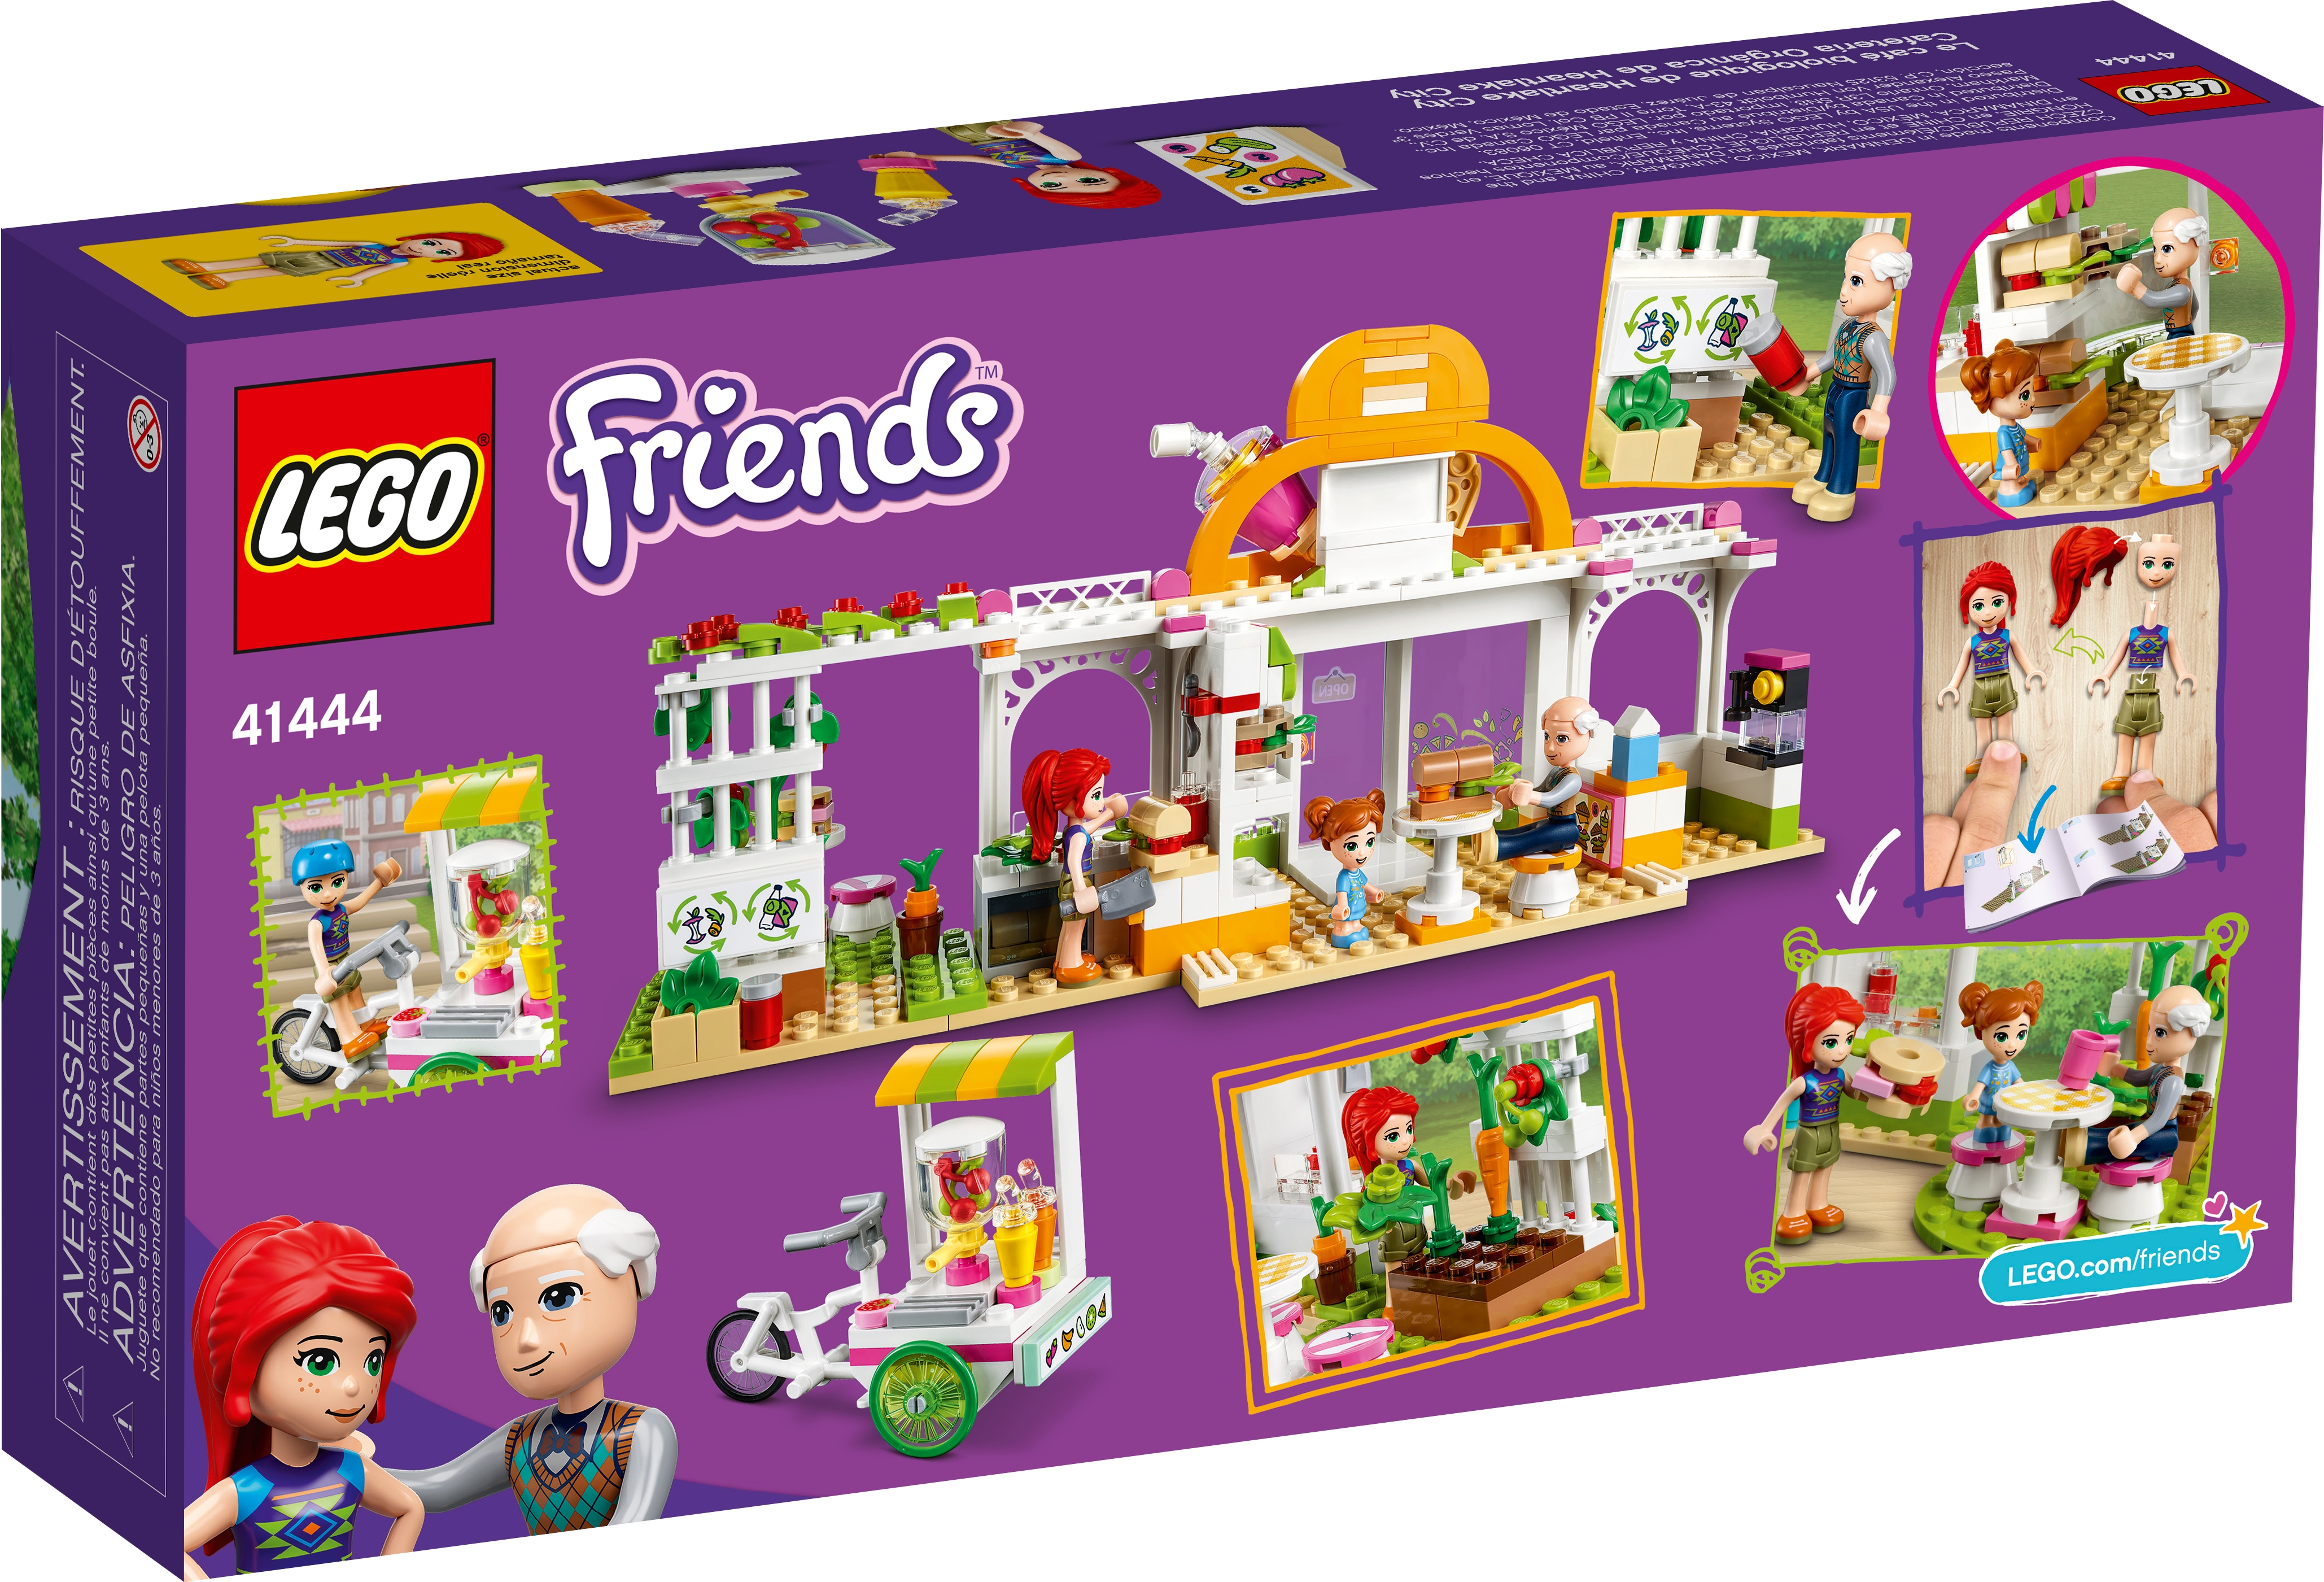 314 pcs NEW LEGO Friends Heartlake City Organic Café Building Kit 41444 